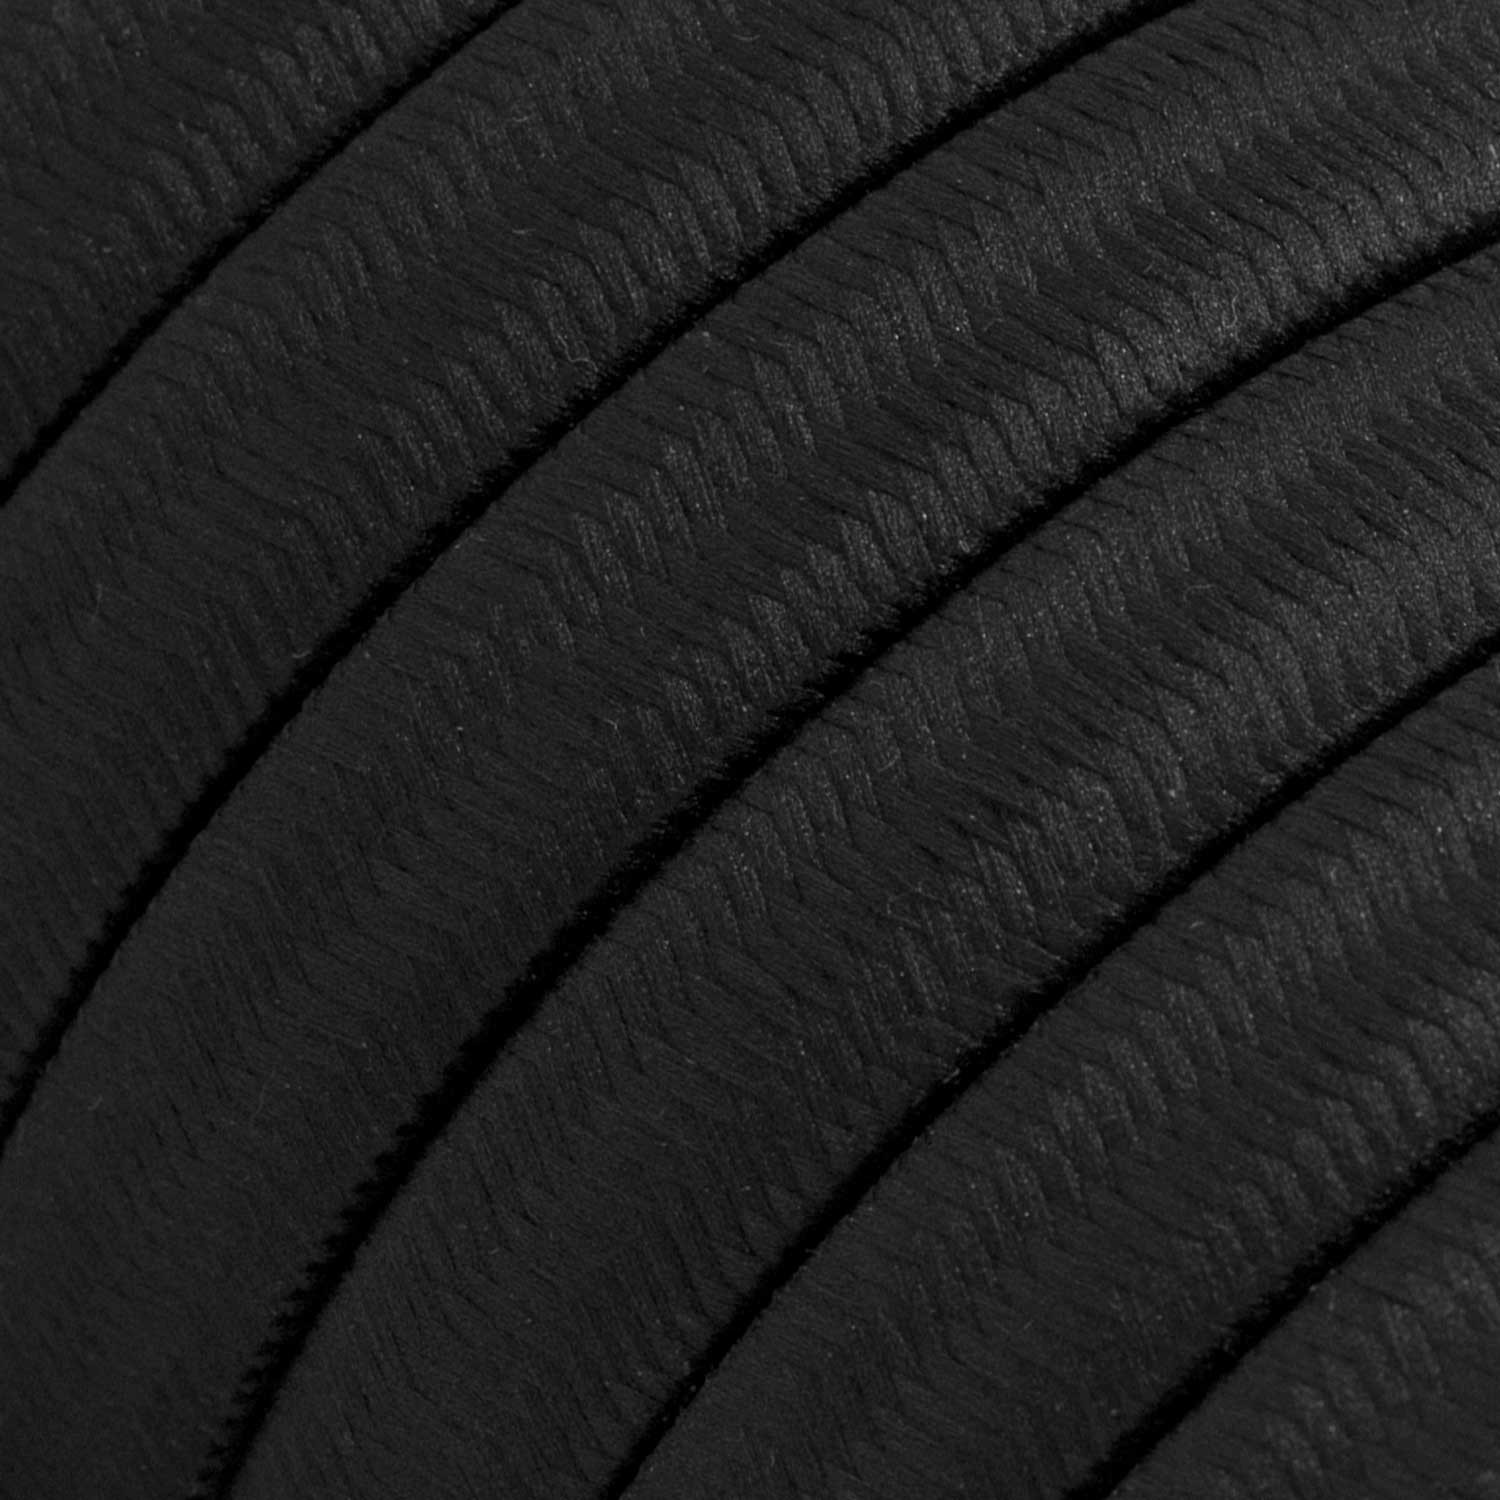 Kit Linear Filé System - con 5m cable textil guirnalda y 7 accesorios de madera pintados de negro